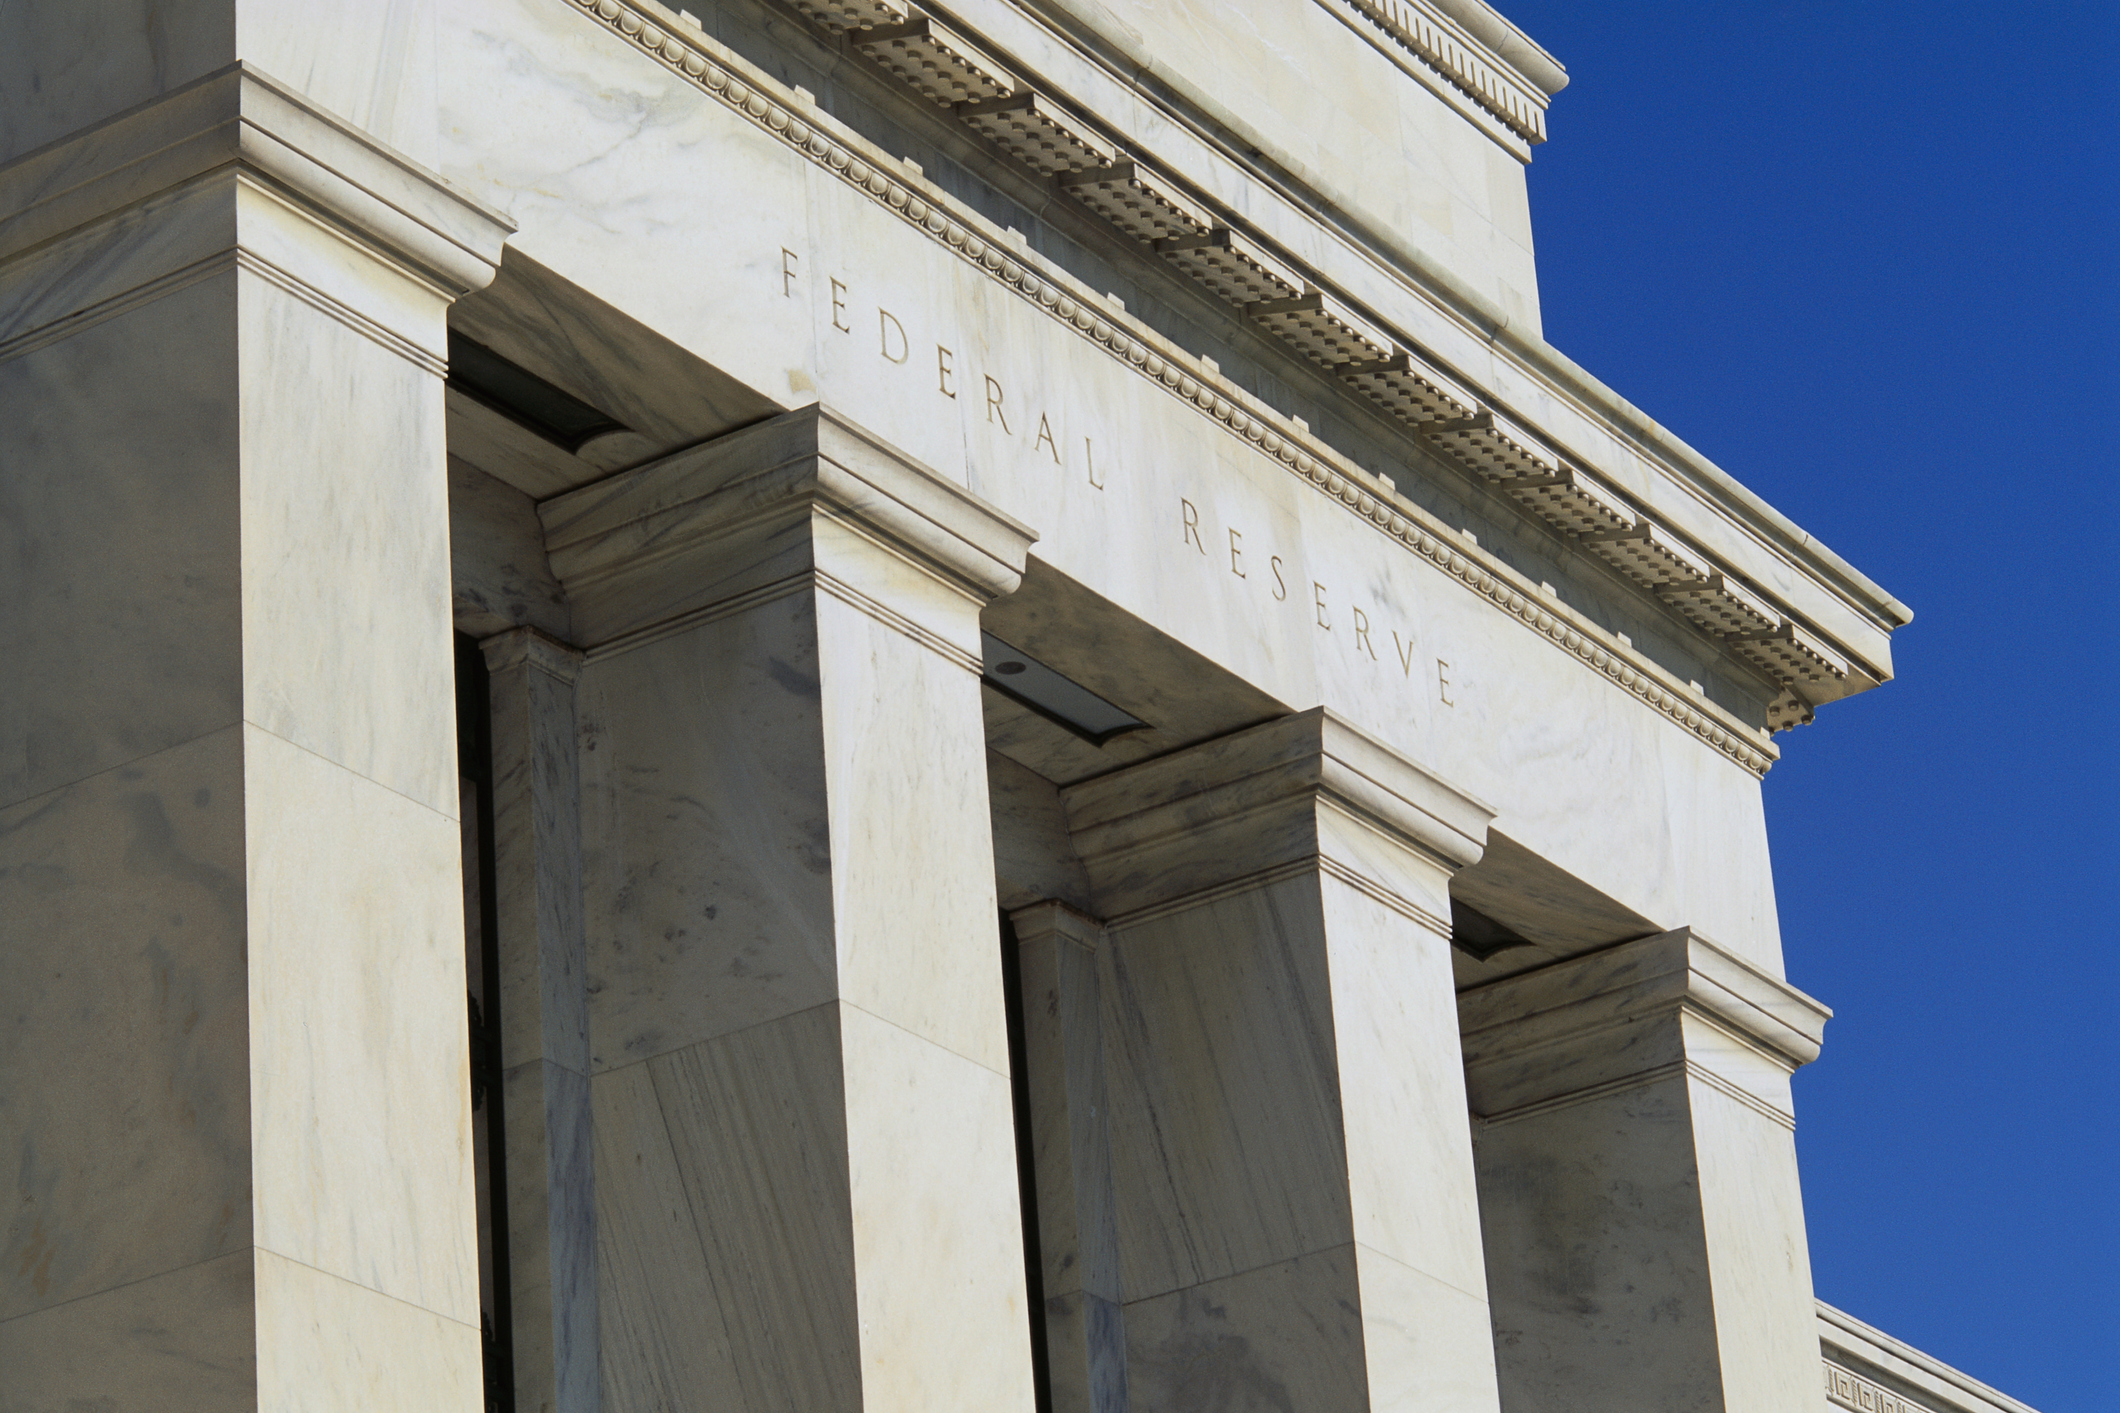 Columns on Federal Reserve